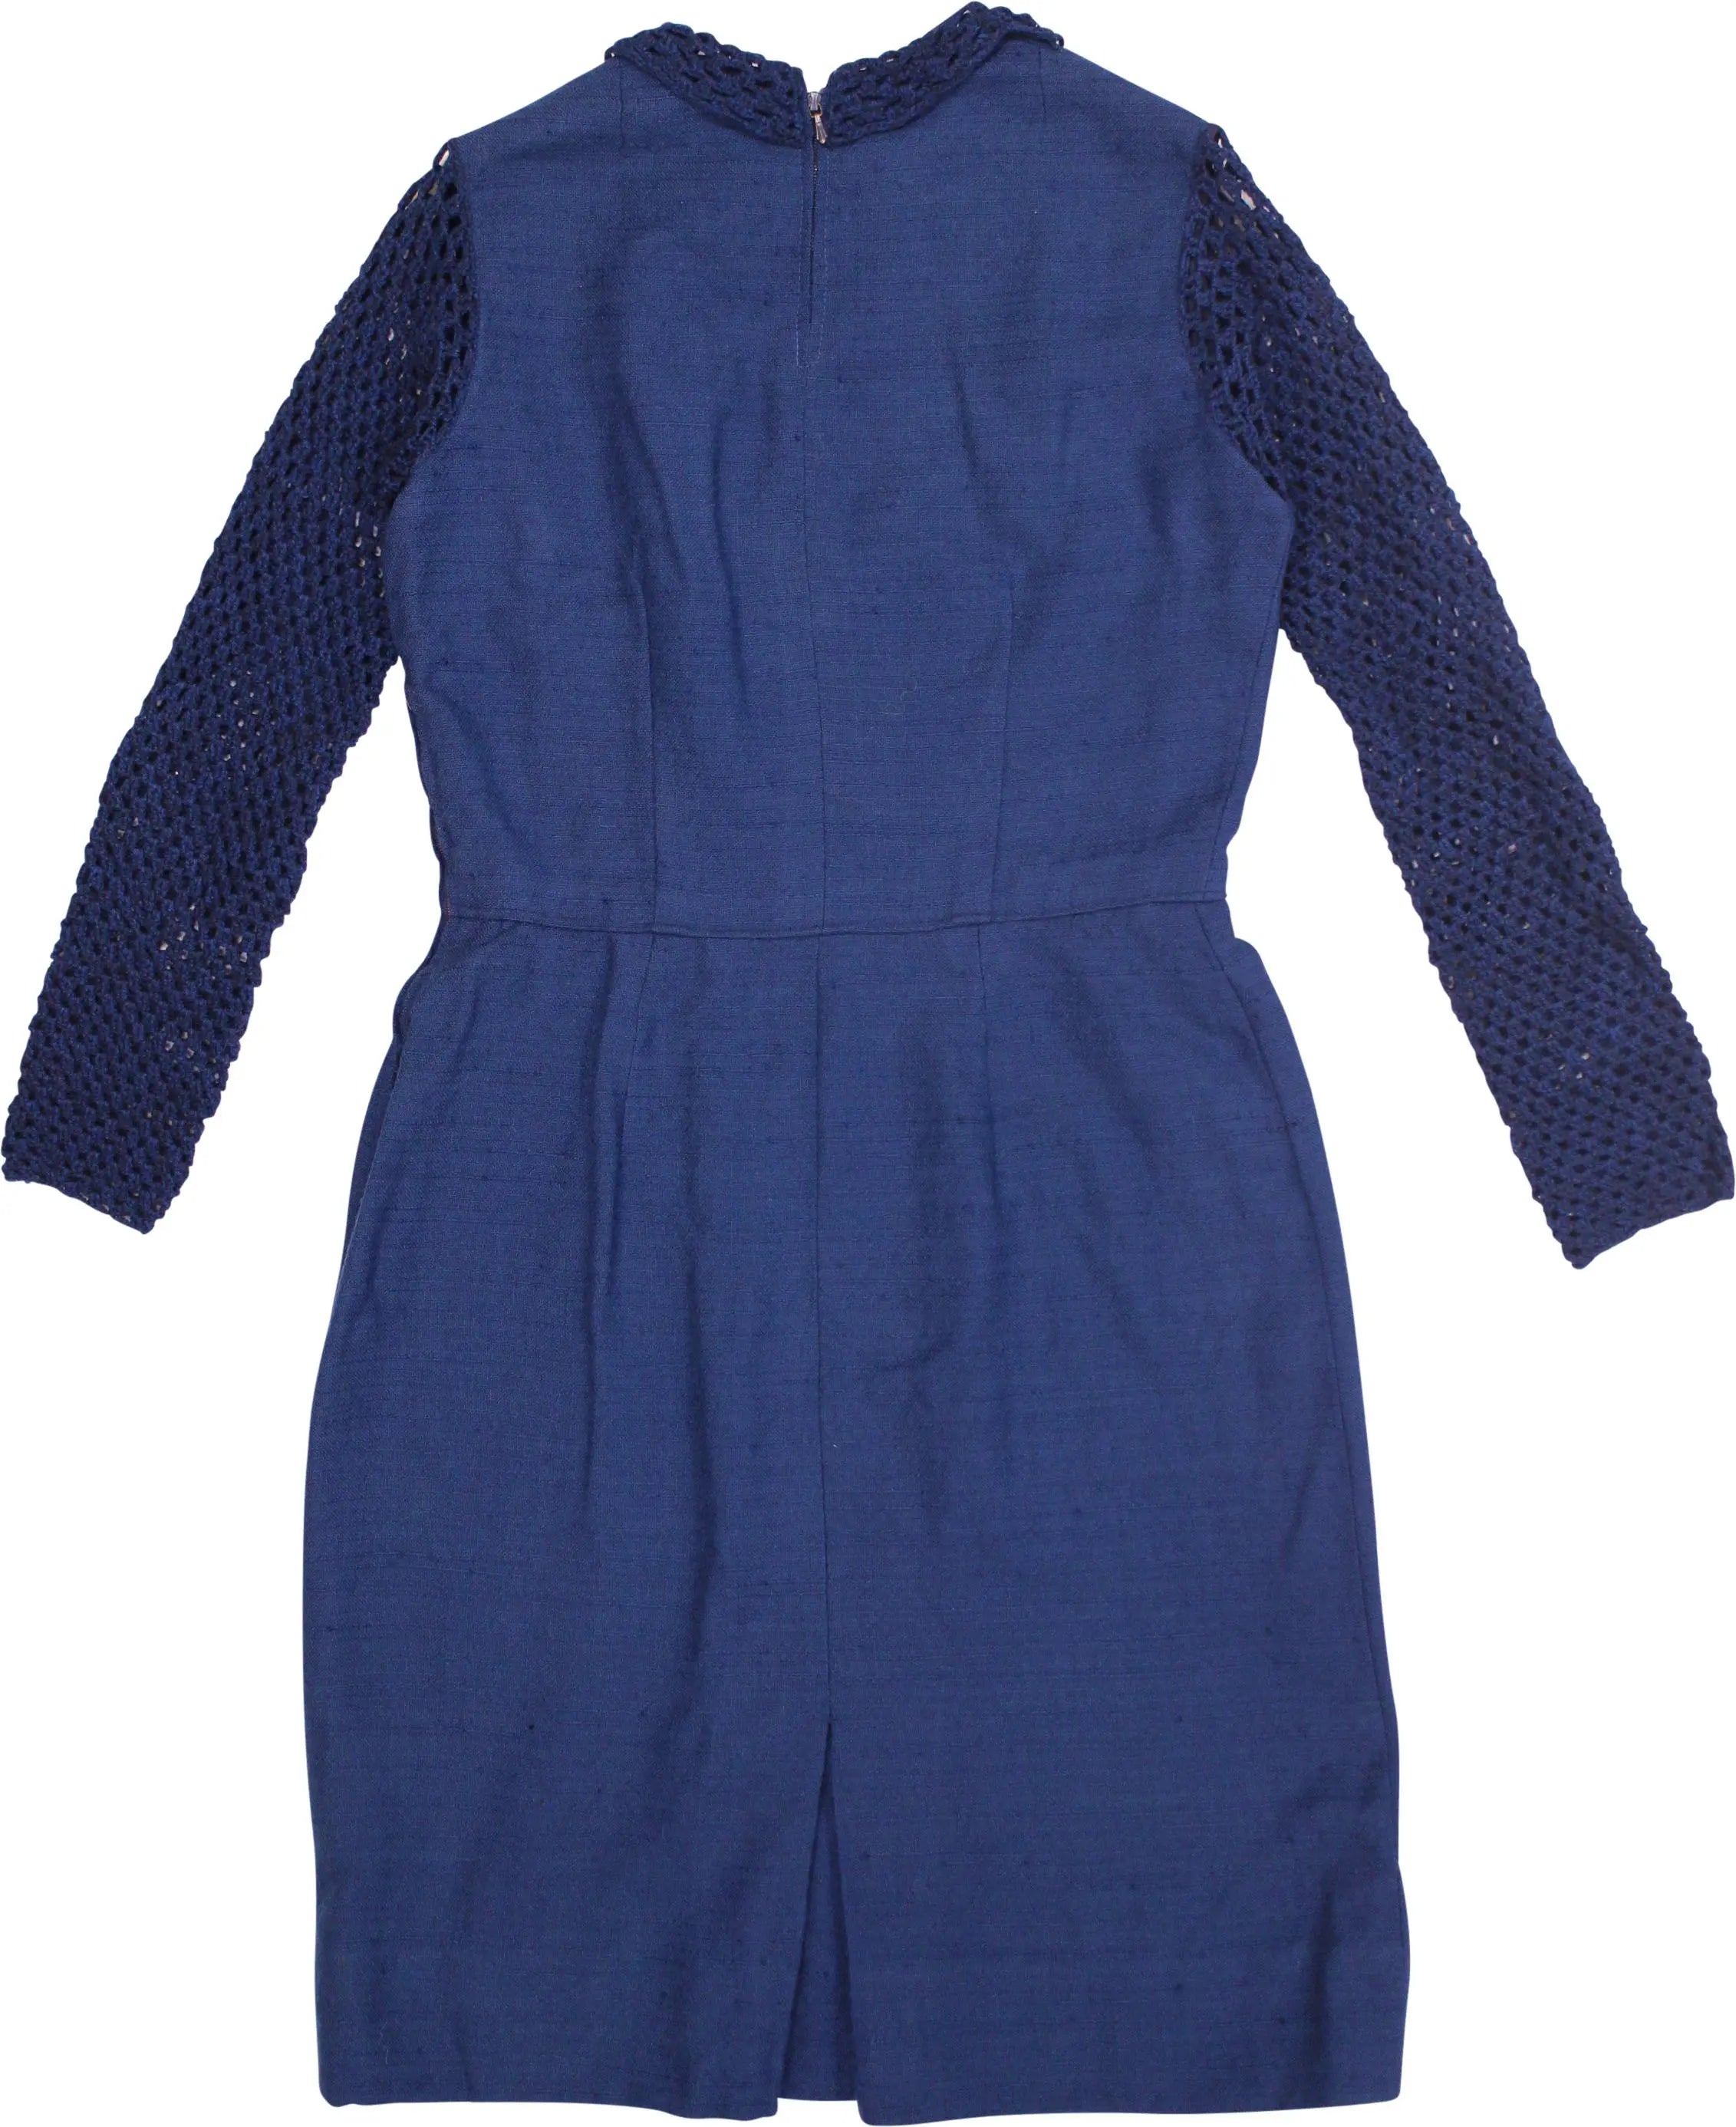 Handmade - Handmade Navy Blue Dress- ThriftTale.com - Vintage and second handclothing